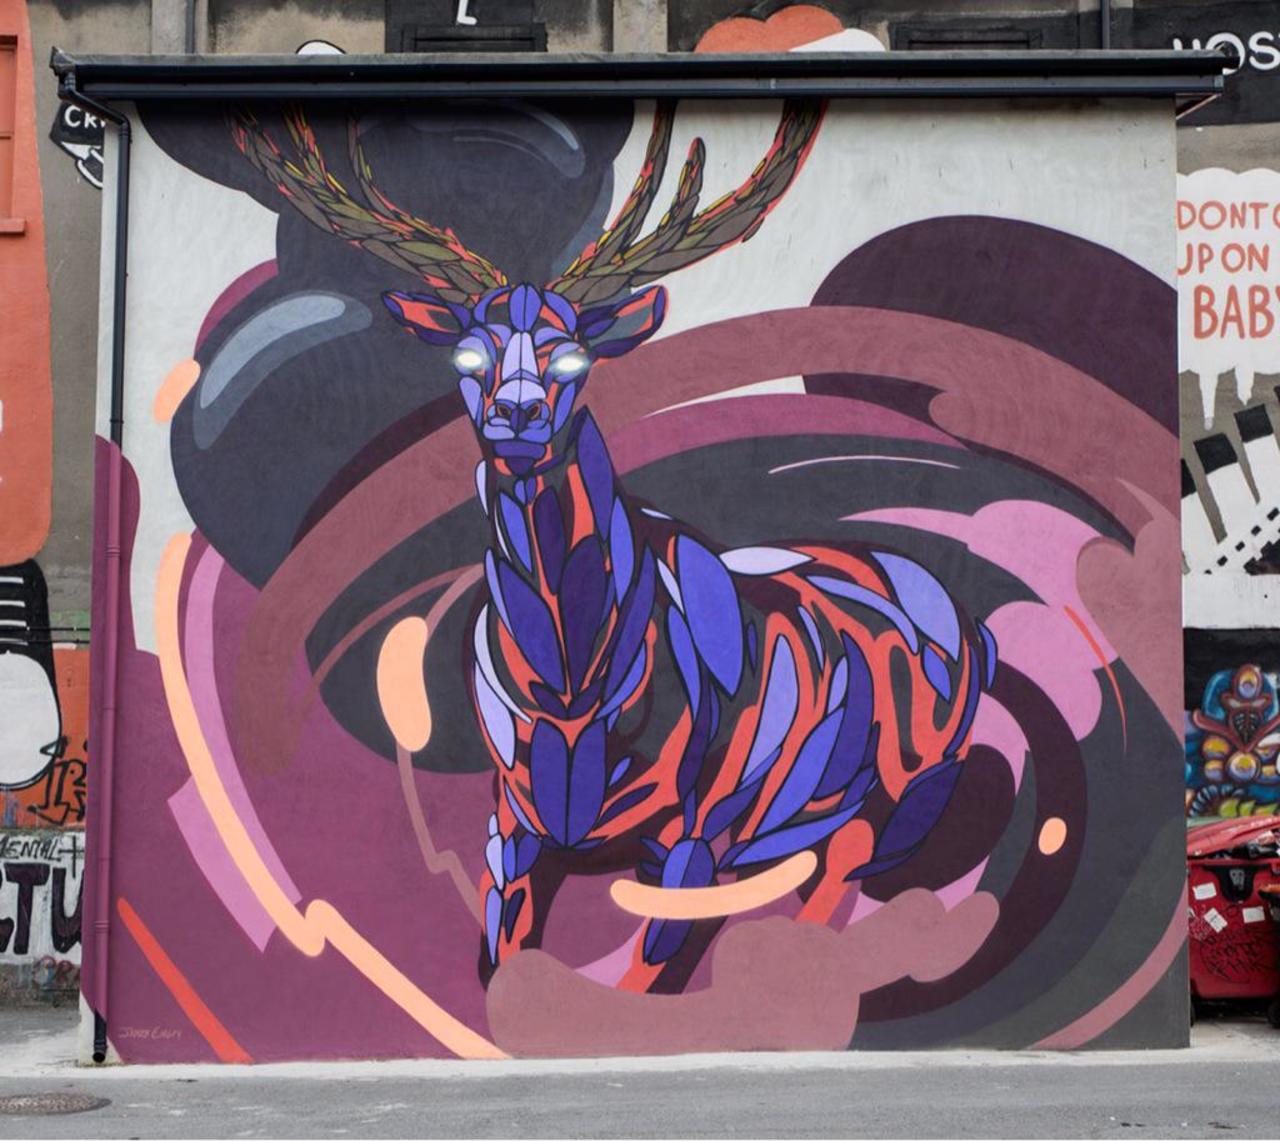 James Earley unveils a series of new pieces in Dublin, Ireland

#streetart #mural #art #graffiti #urbanart http://t.co/Y64TK3ad2J